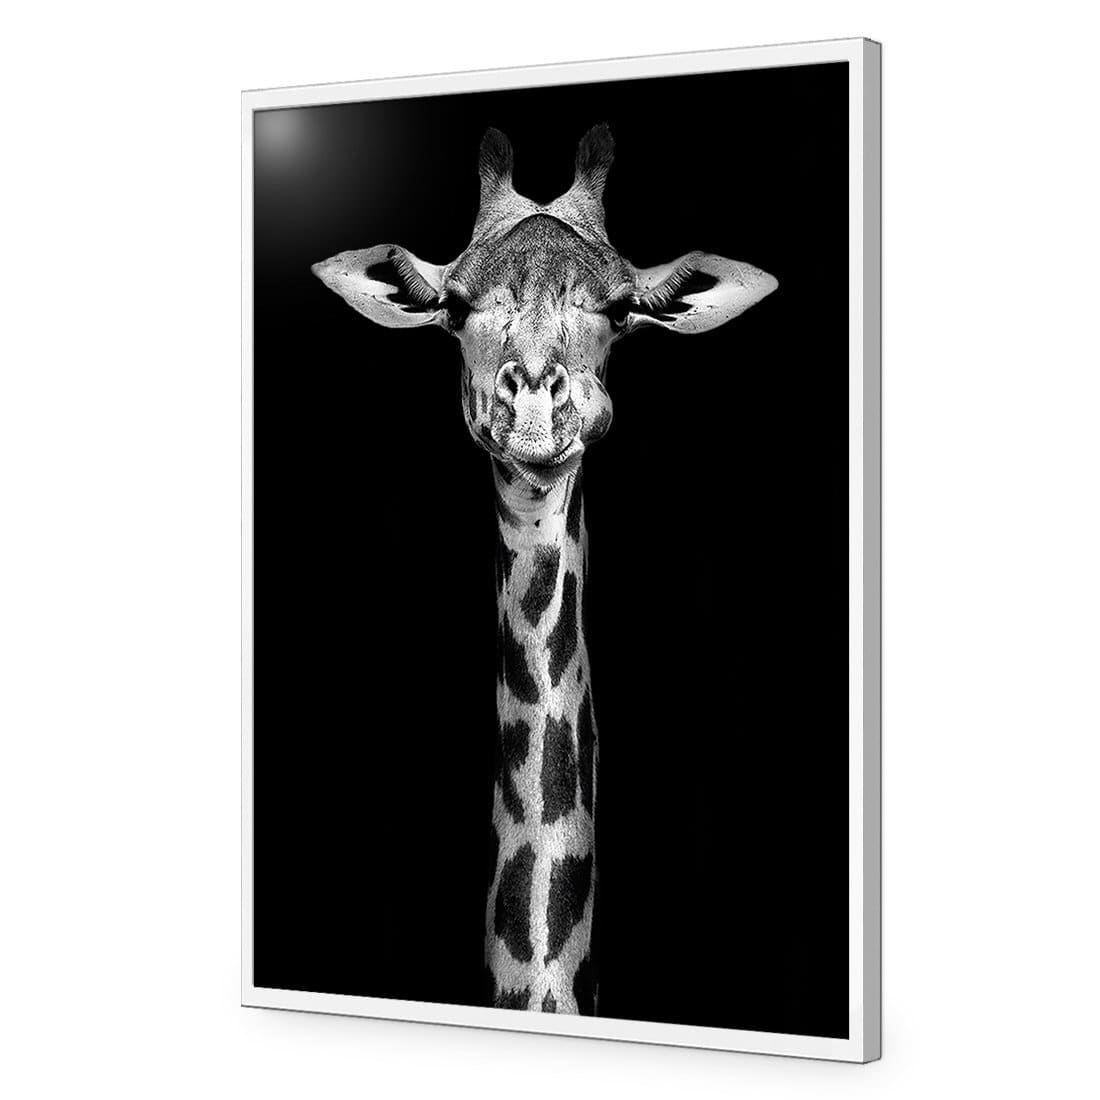 Thornycroft Giraffe-Acrylic-Wall Art Design-Without Border-Acrylic - White Frame-45x30cm-Wall Art Designs